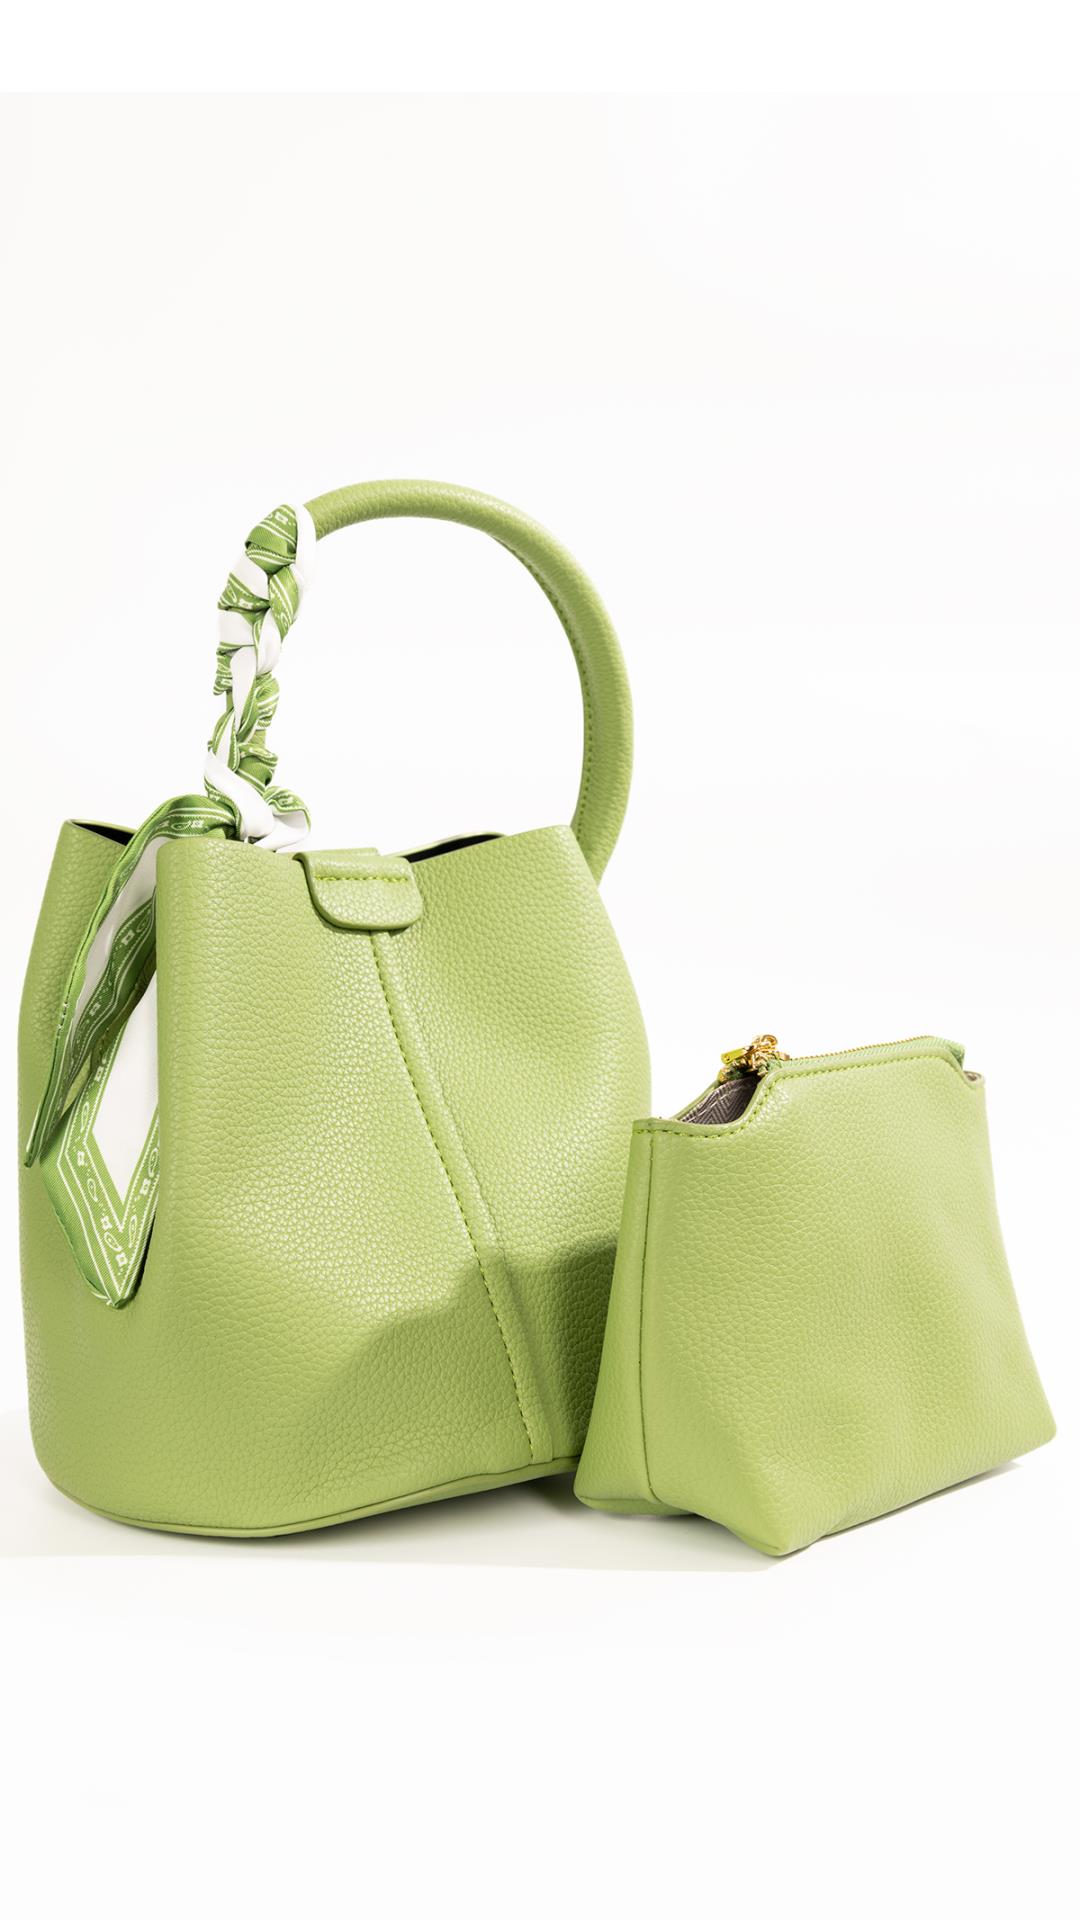 Soft handbag with inner bag